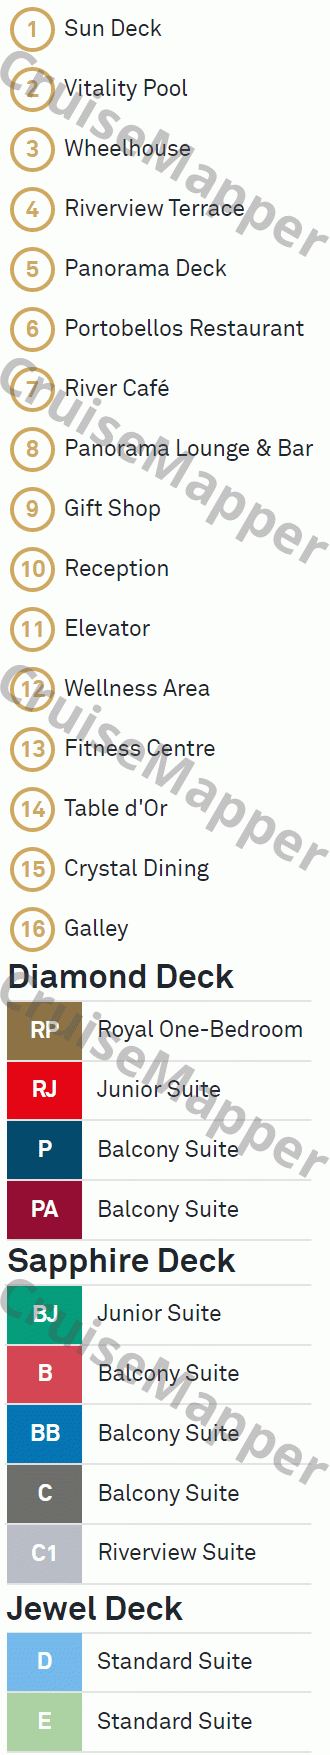 Scenic Azure deck 3 plan (Diamond-Lobby-Lounge) legend